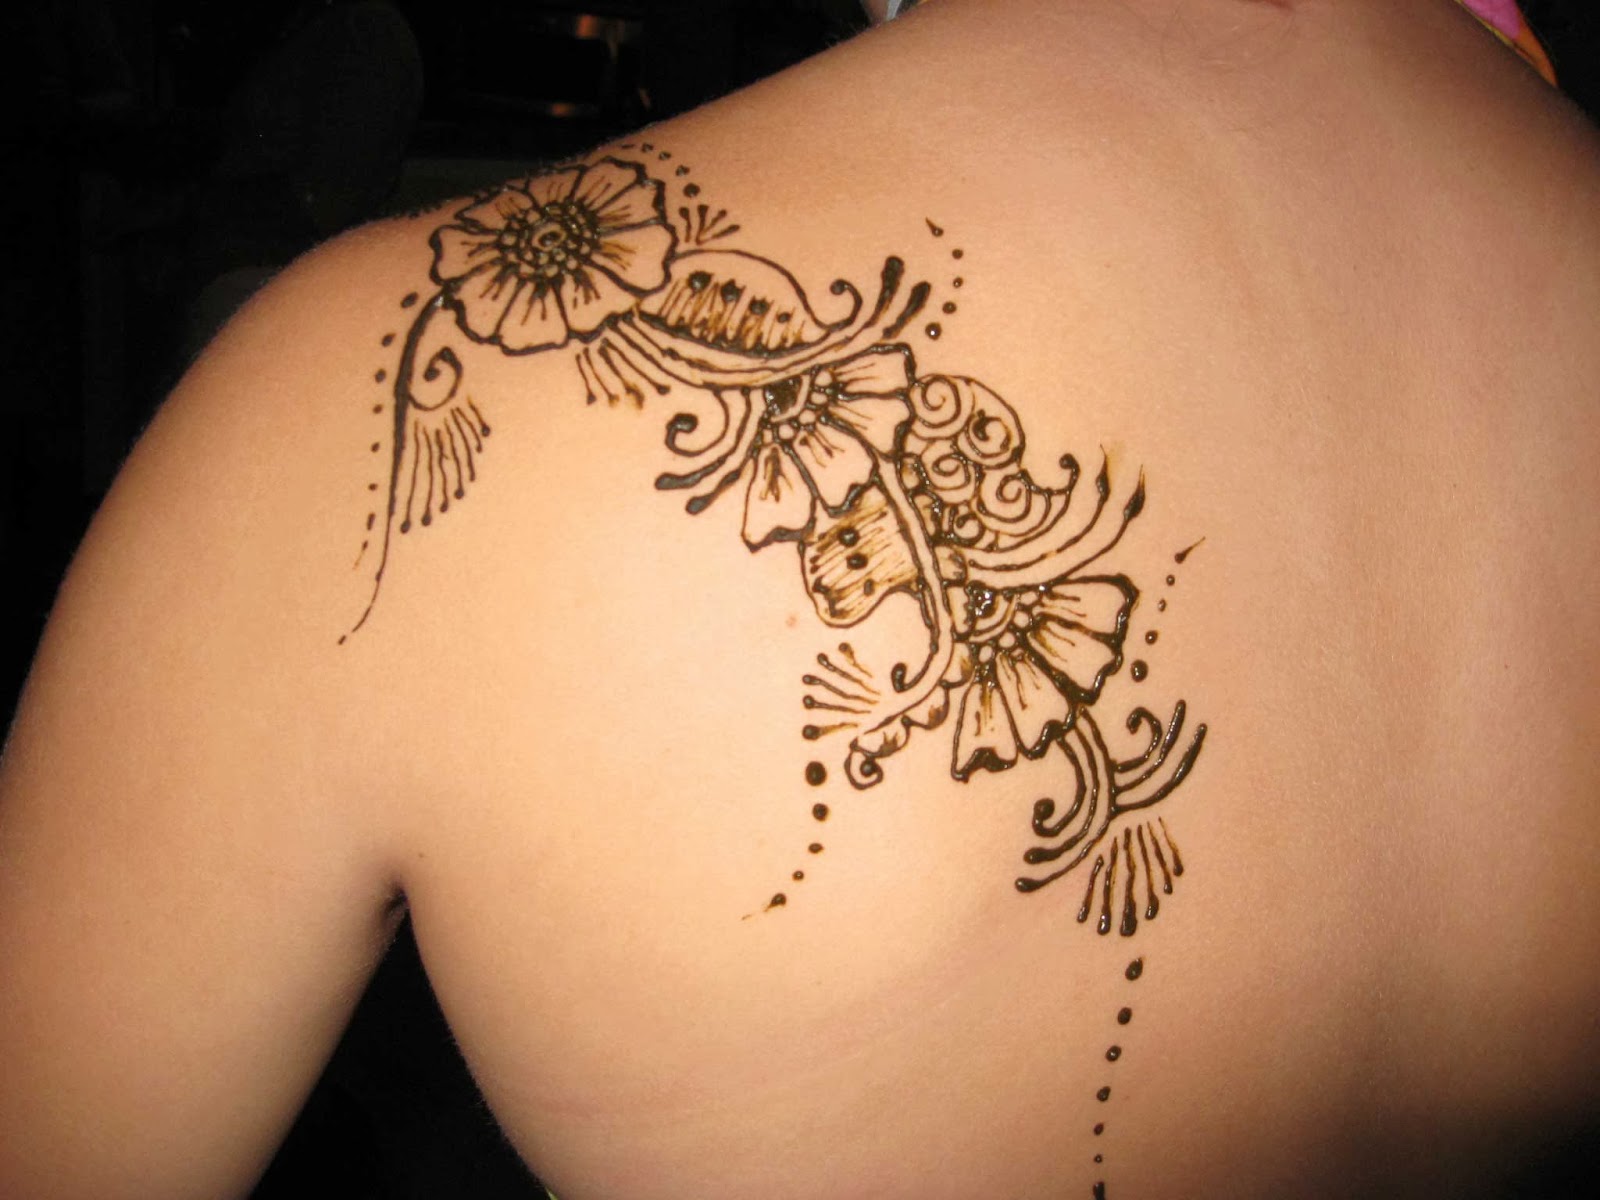 Tattoos for Girls| Tattoo Designs of a Girl| Tattoo Designs Girls ...